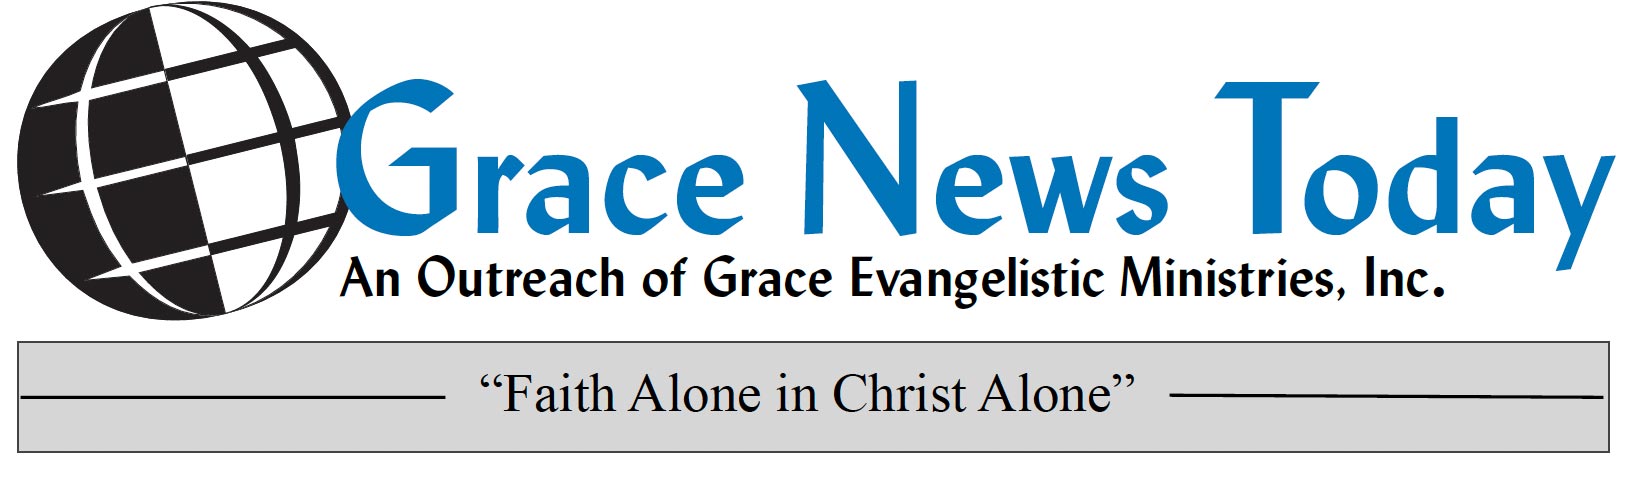 grace news today